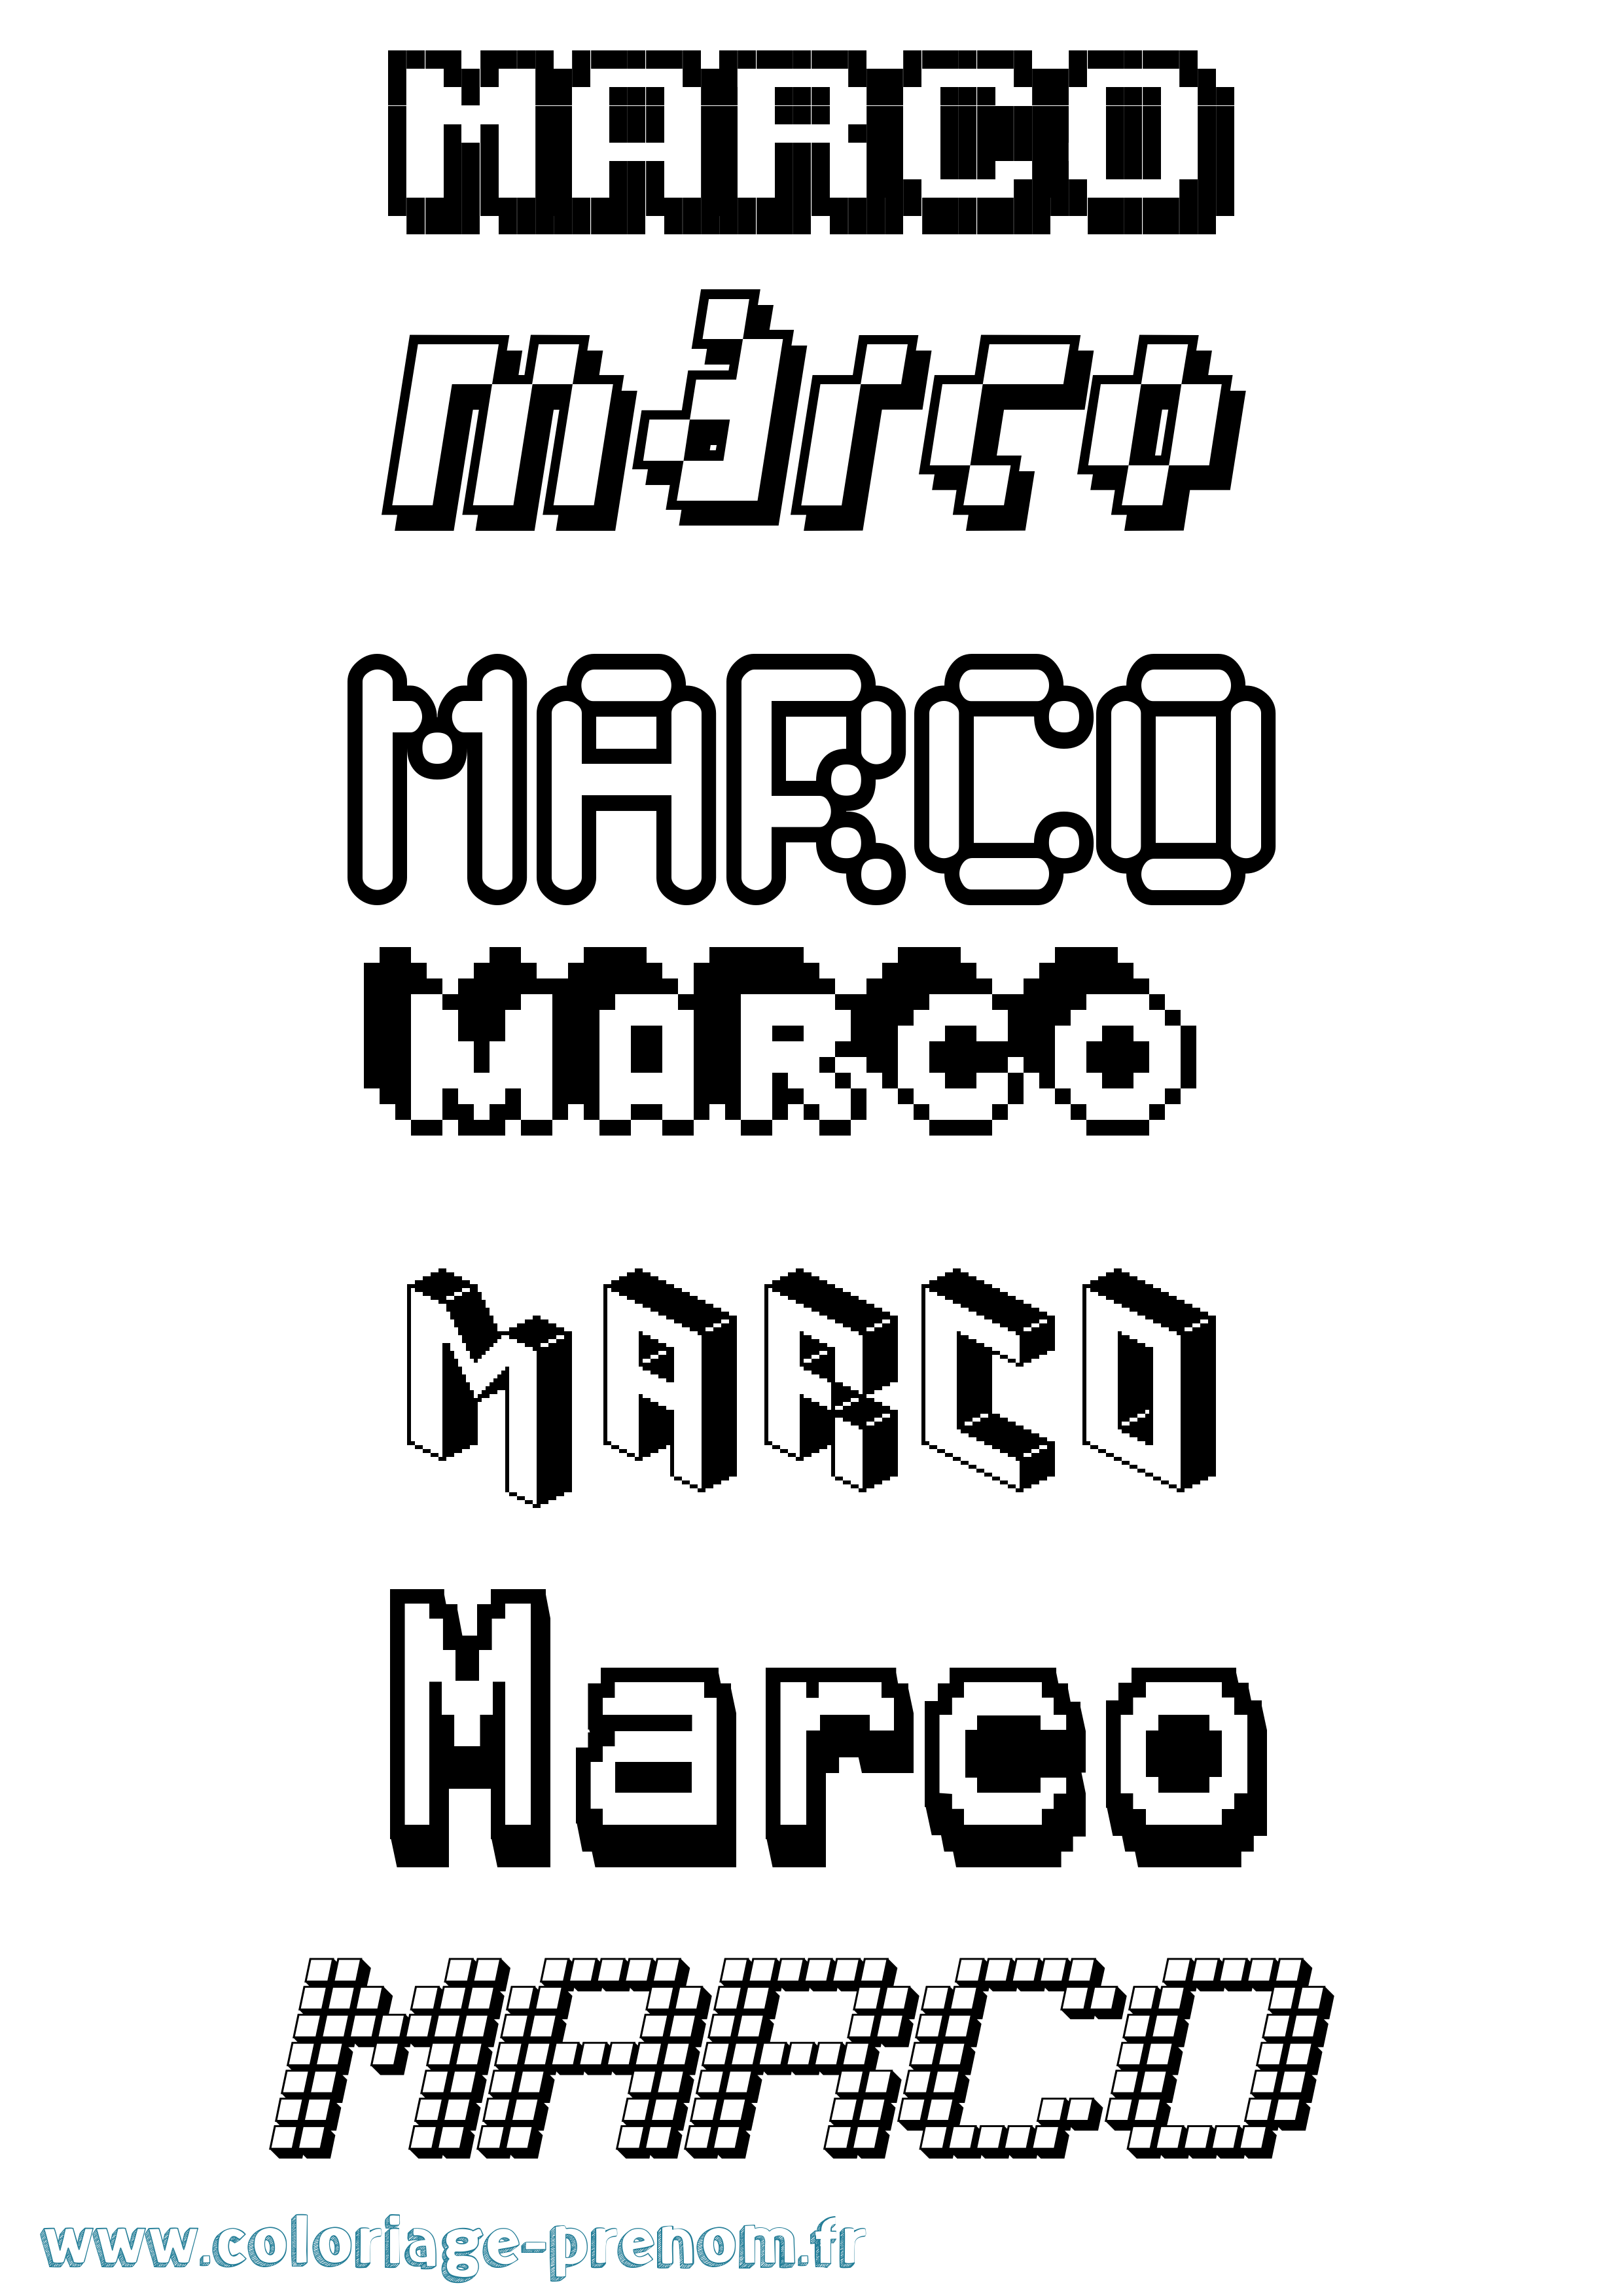 Coloriage prénom Marco